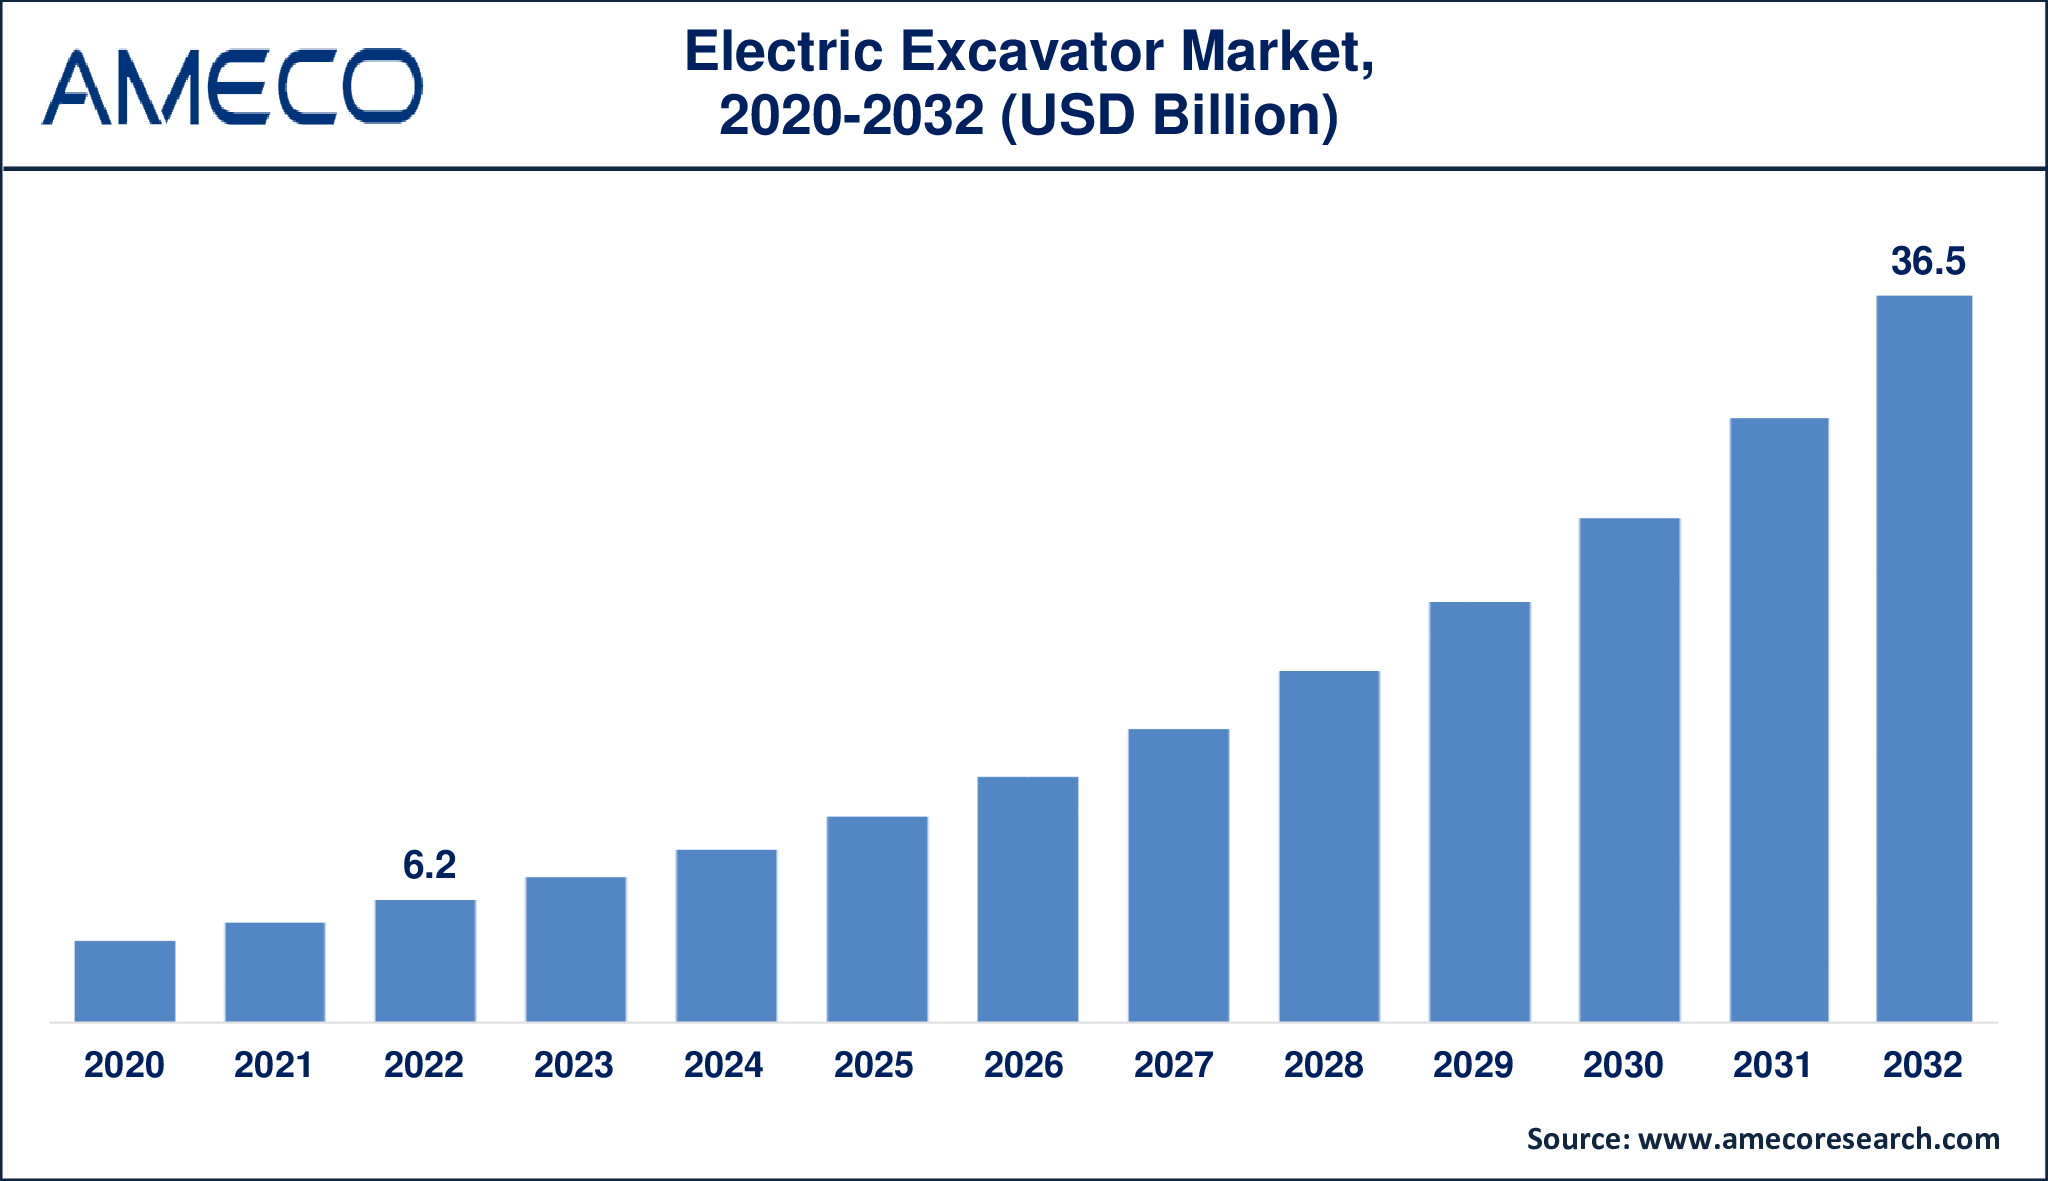 Electric Excavator Market Dynamics